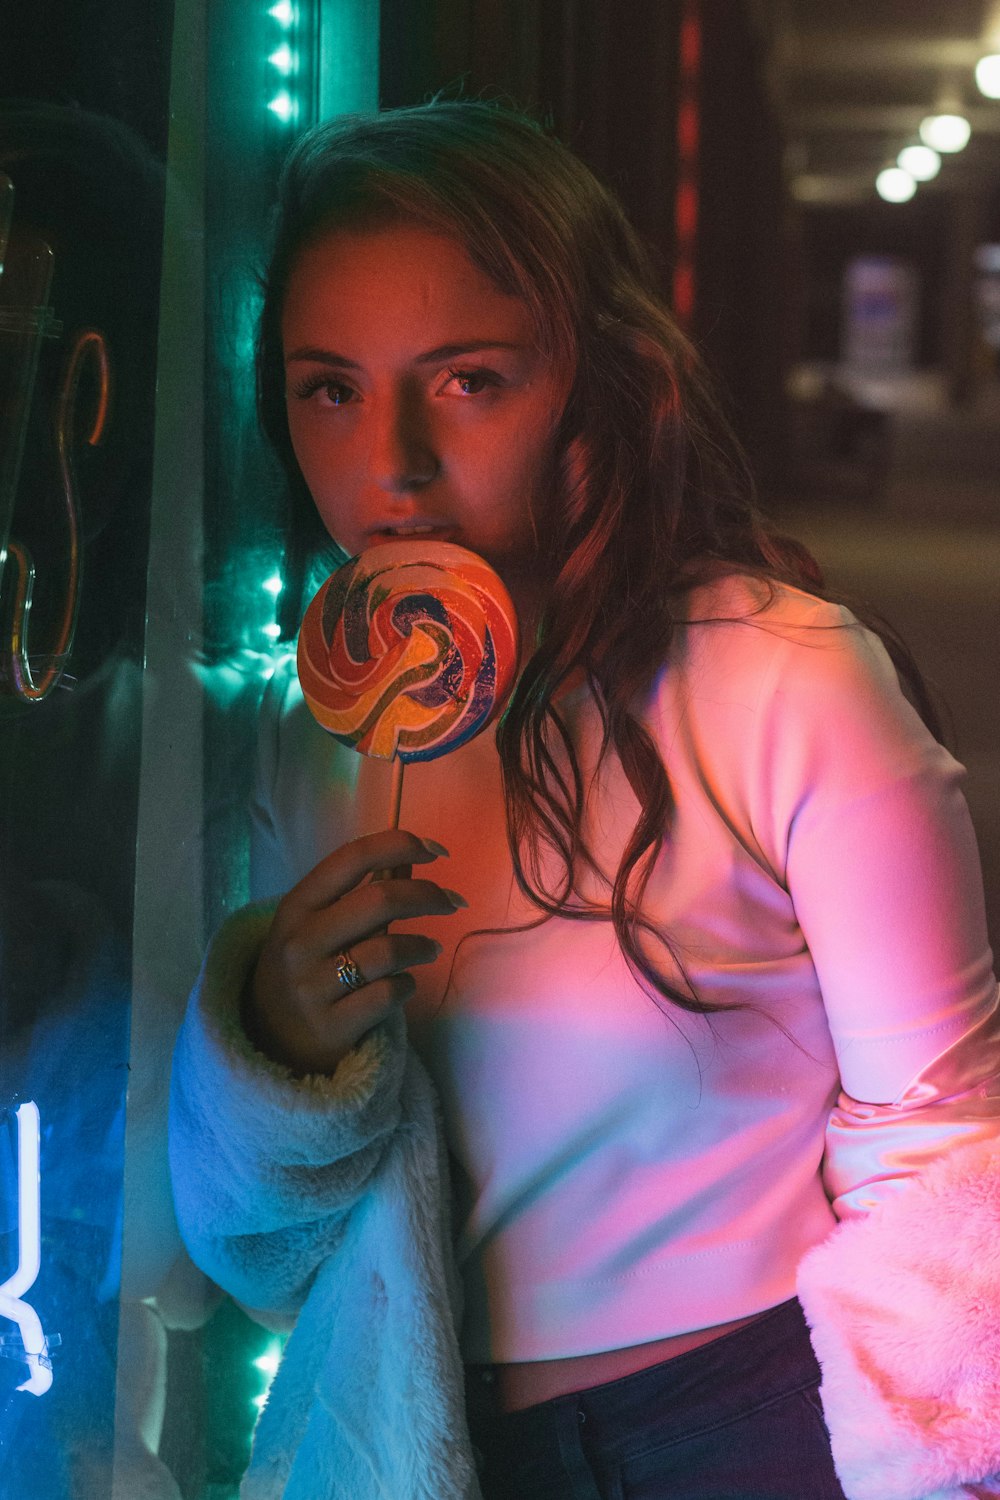 woman wearing white top holding lollipop